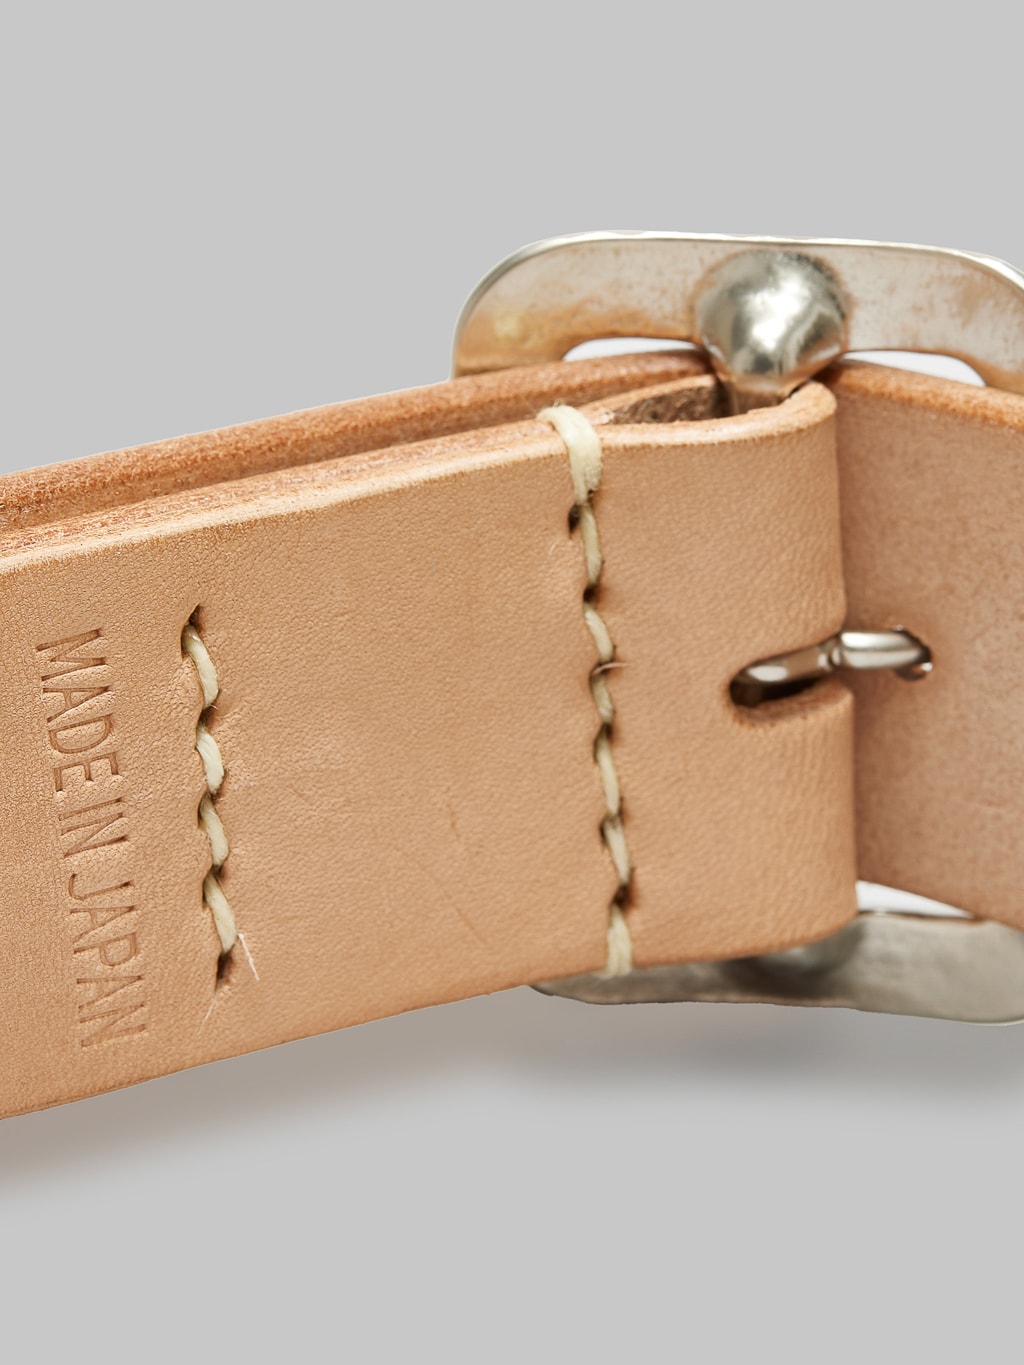 Sugar Cane leather garrison belt tan stitching detail